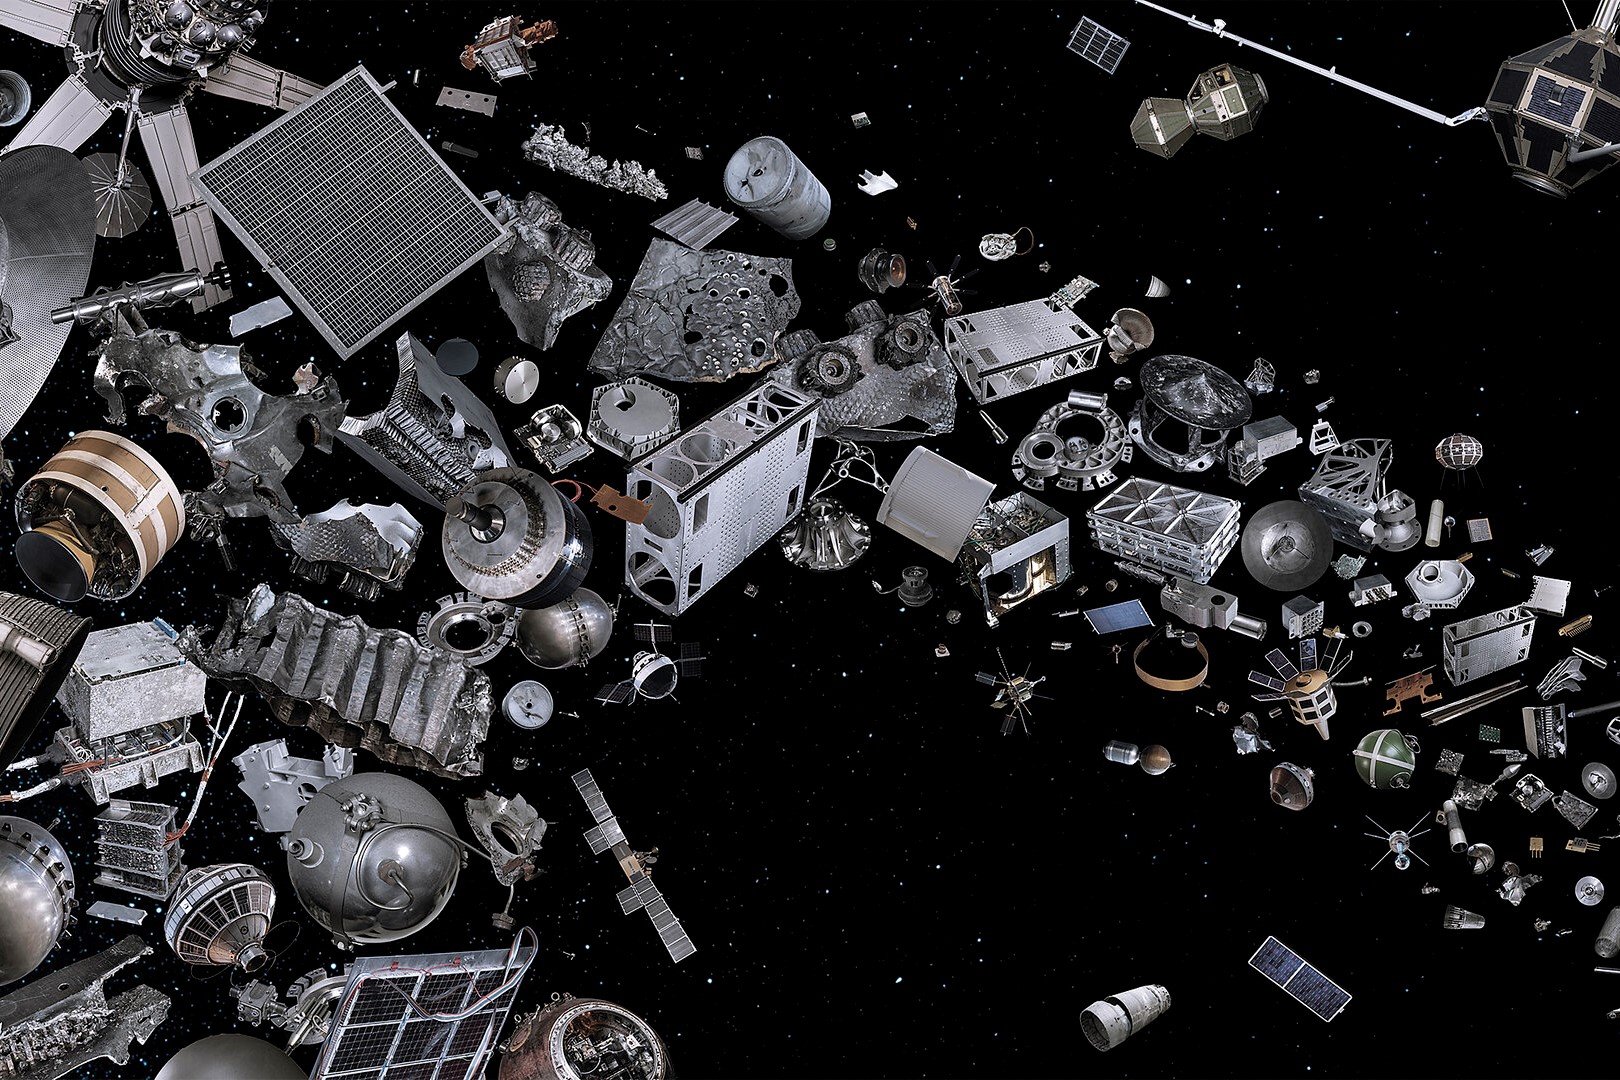 European mission to remove space debris is struck by debris